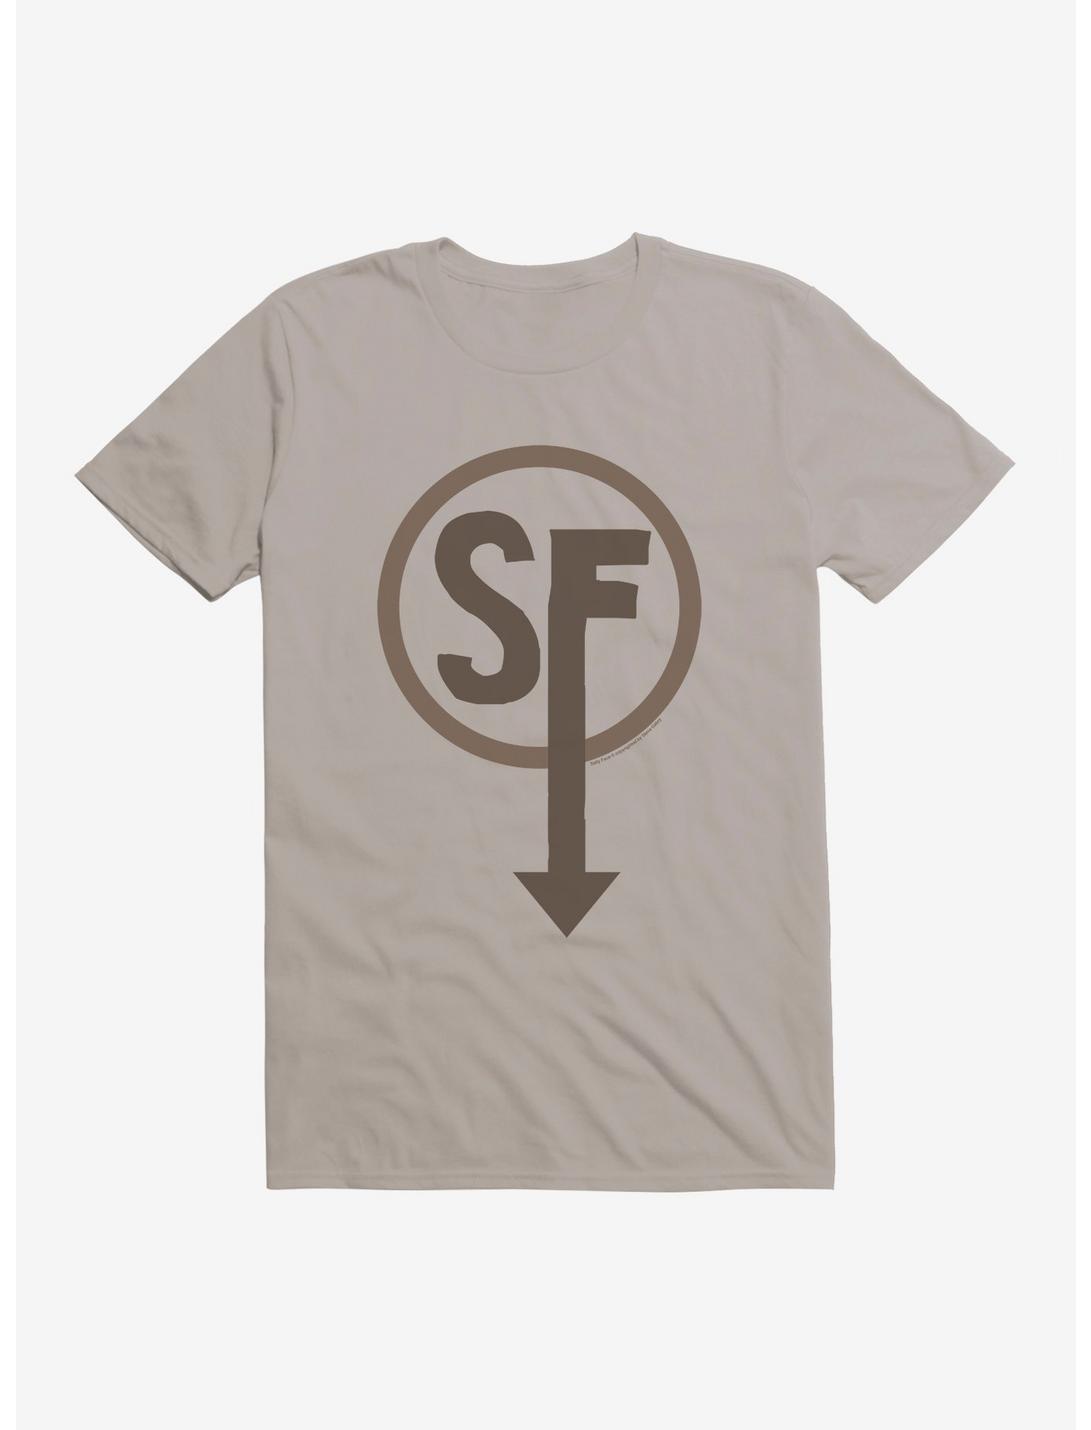 Sally Face Brown Sanity's Fall Larry T-Shirt, LIGHT GREY, hi-res